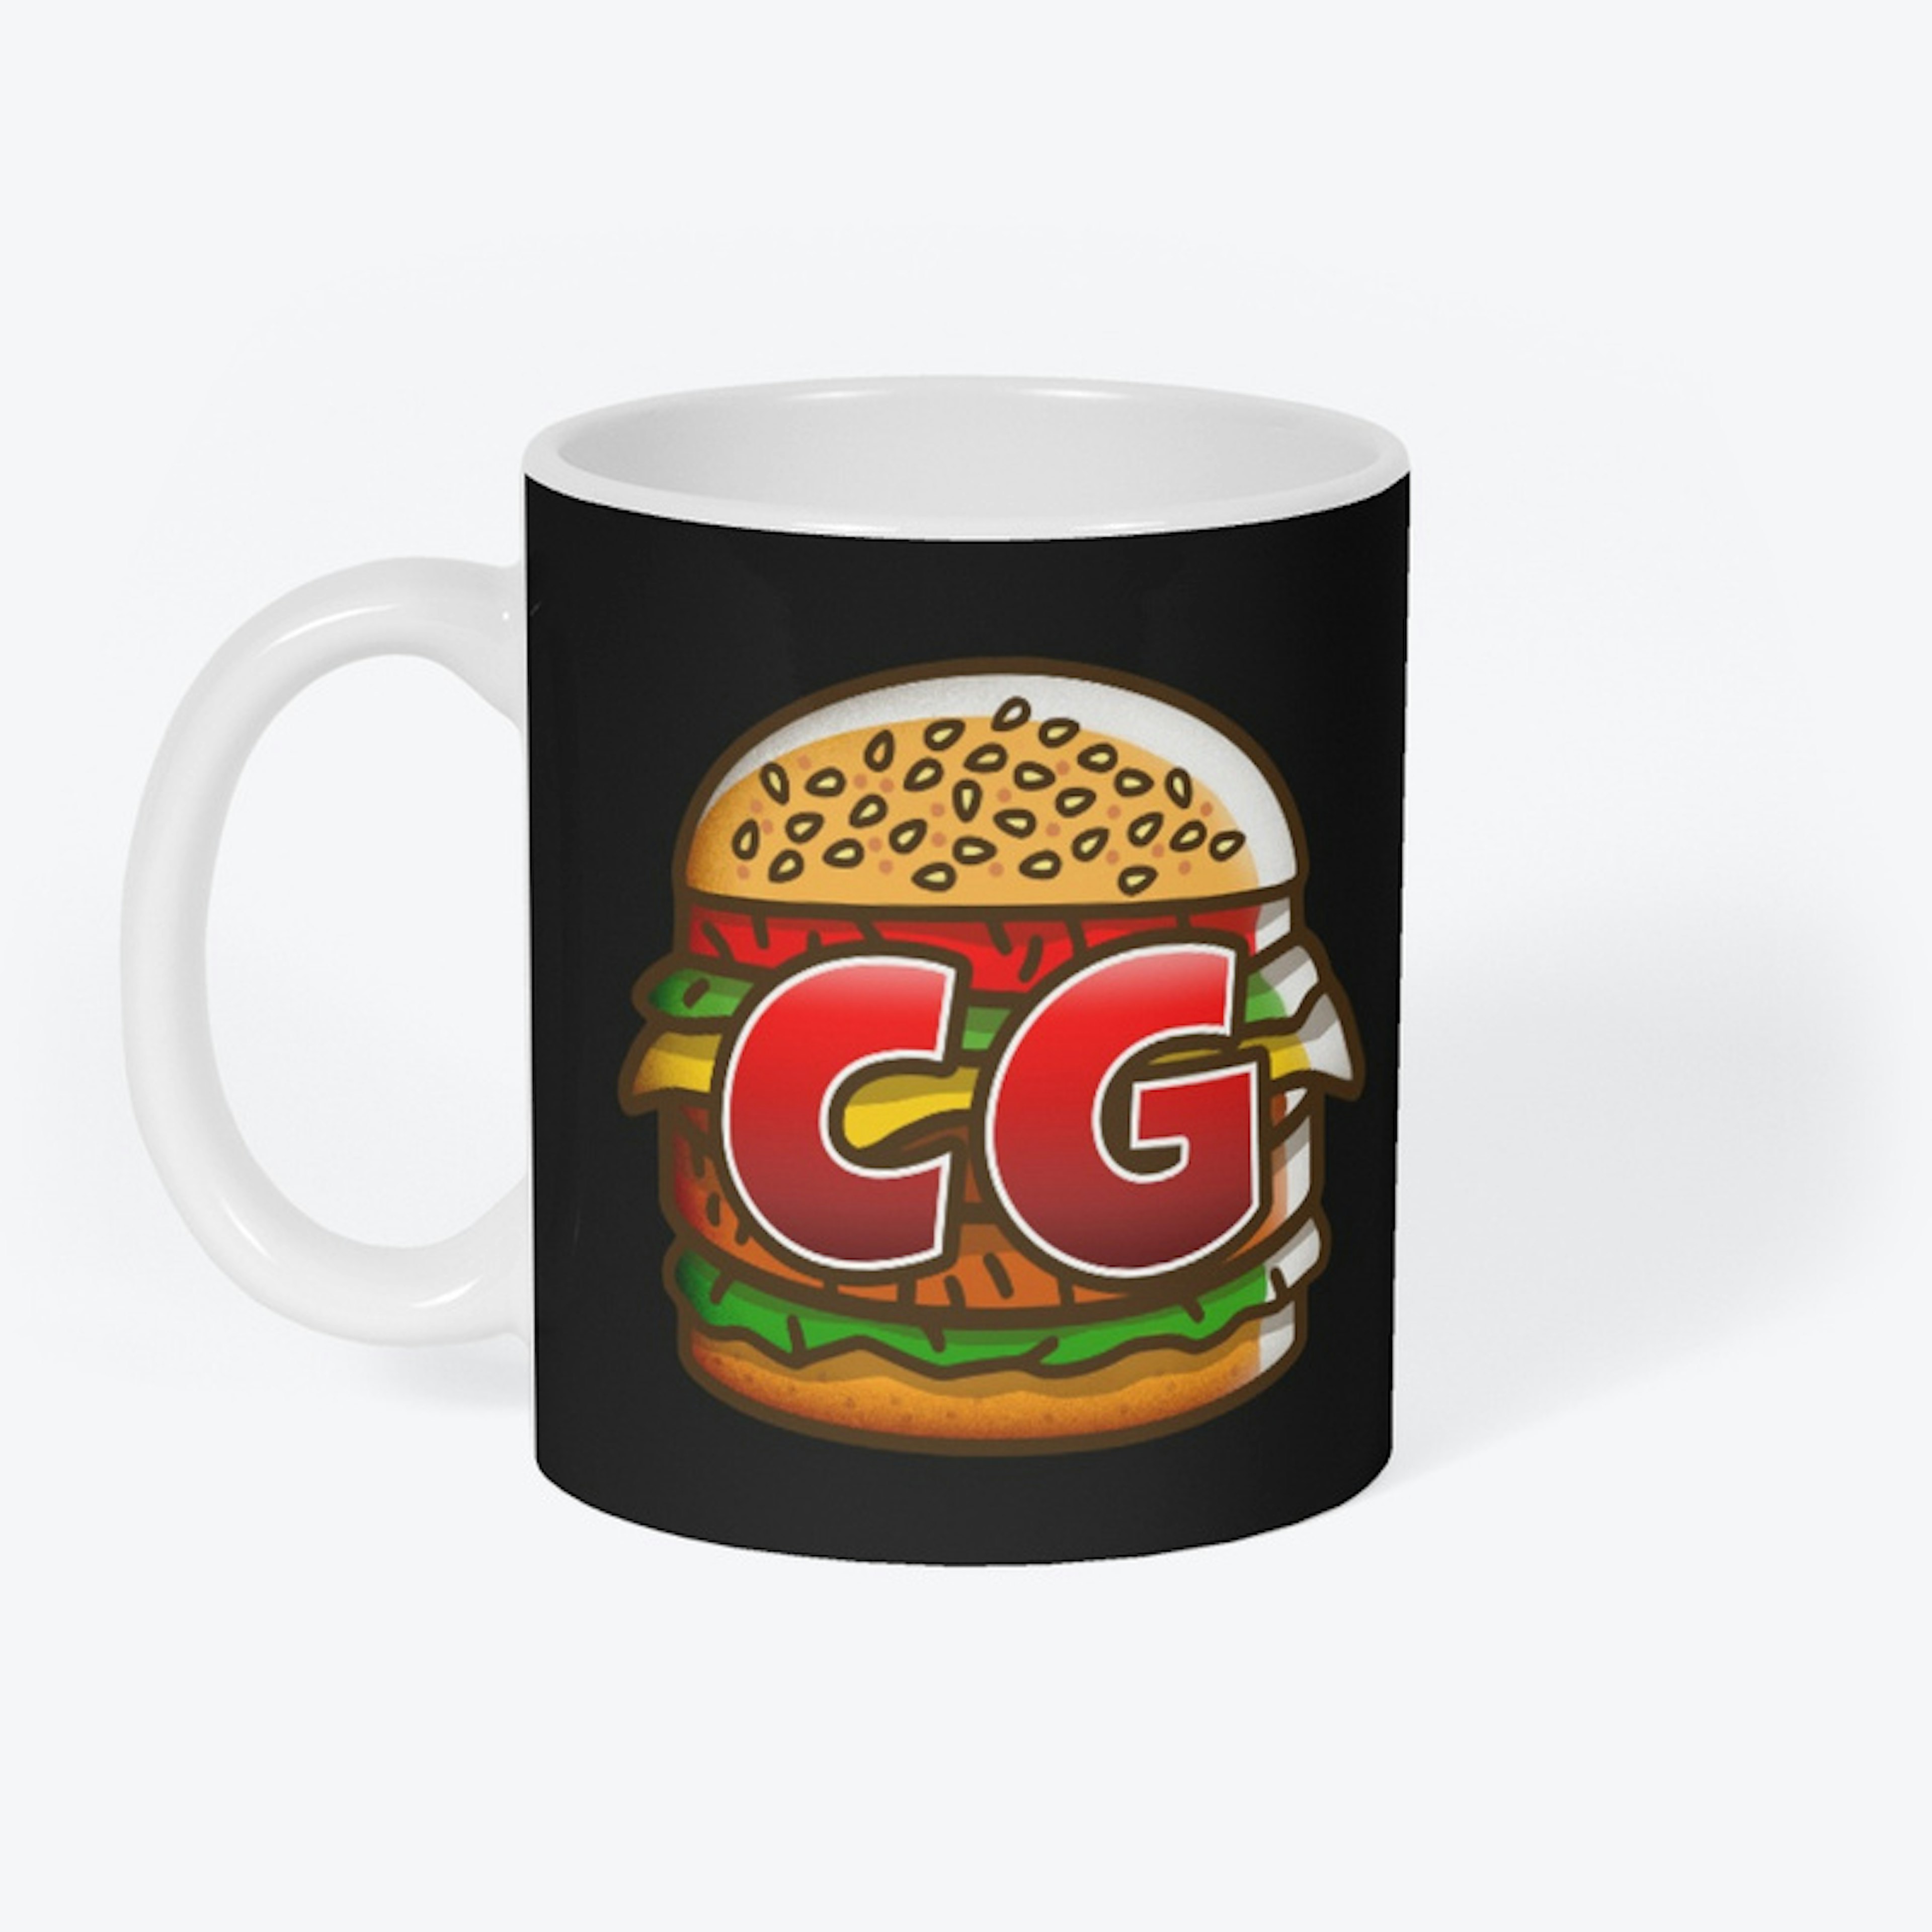 Camodo Gaming Mug